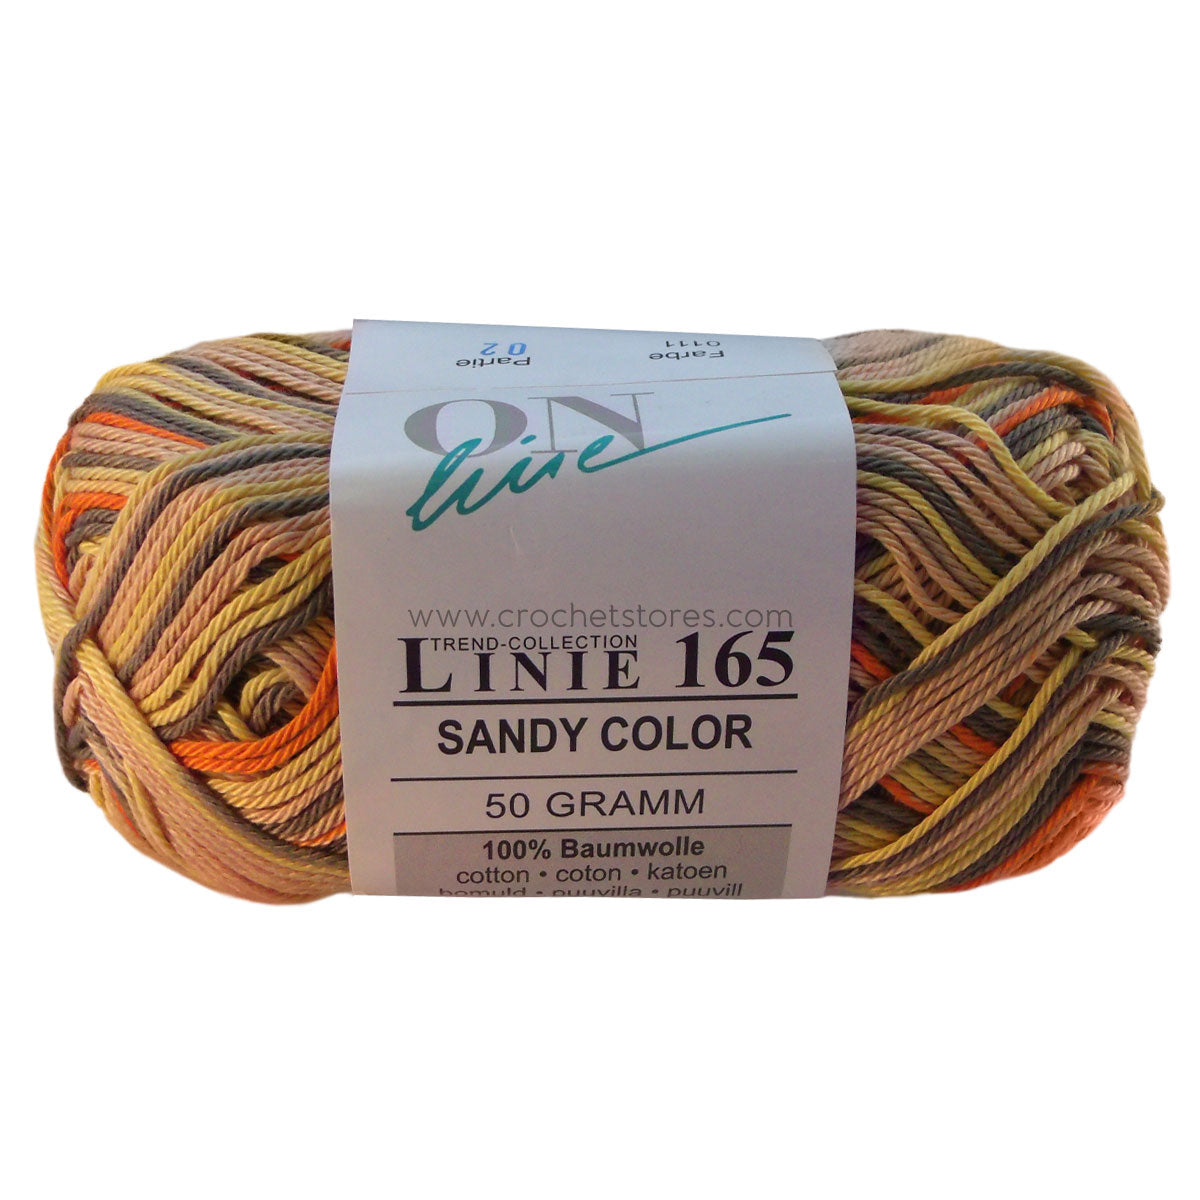 SANDY - Crochetstores110165-01114014366145561